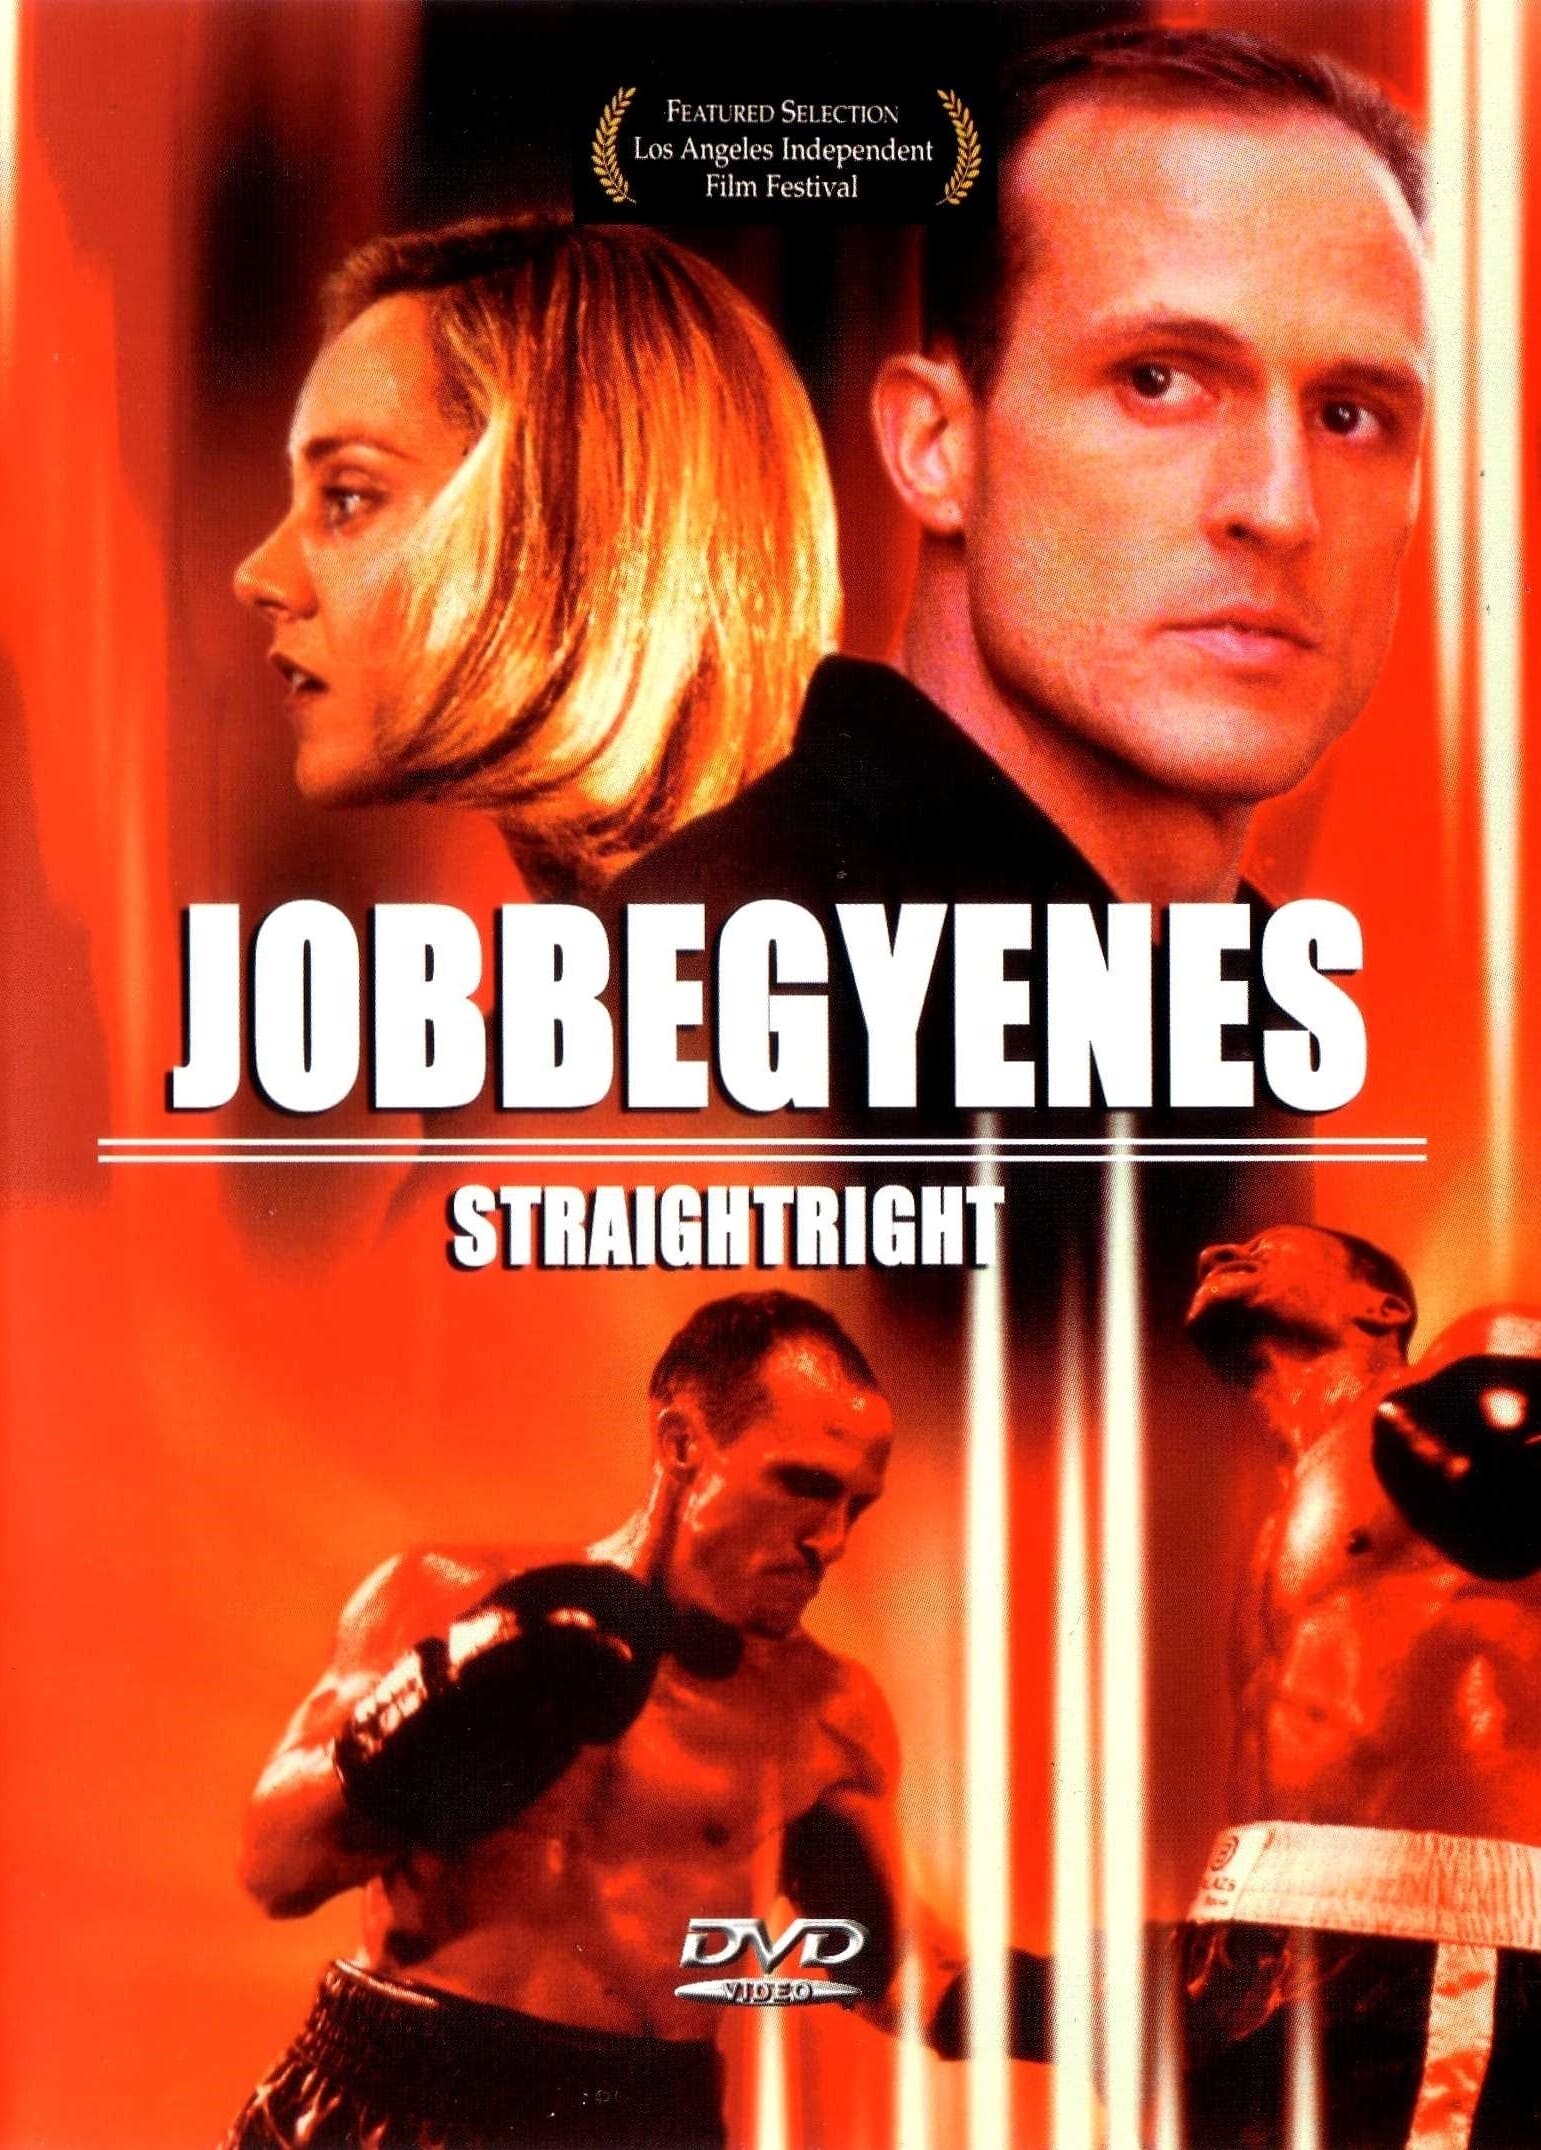 Straight Right (2000)